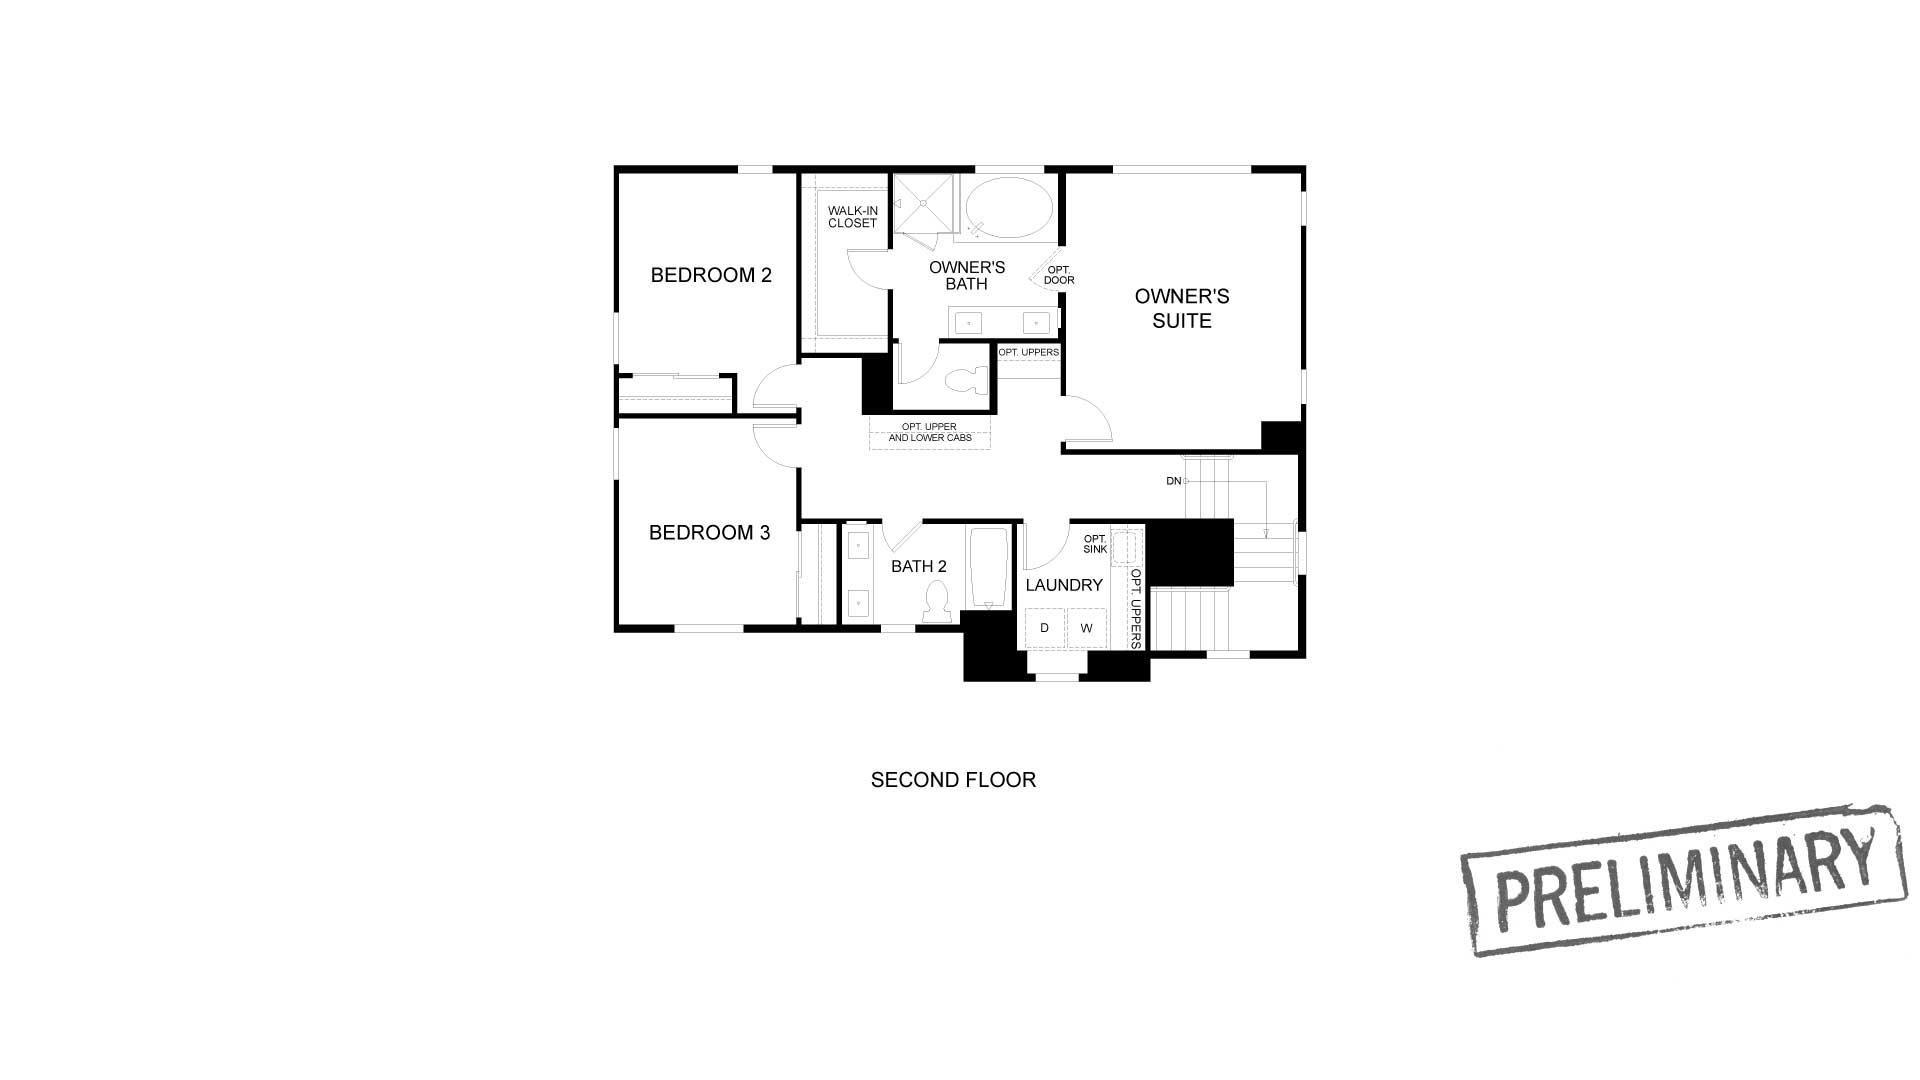 Residence 1 - Second Floor. Residence 1 New Home in Martinez, CA